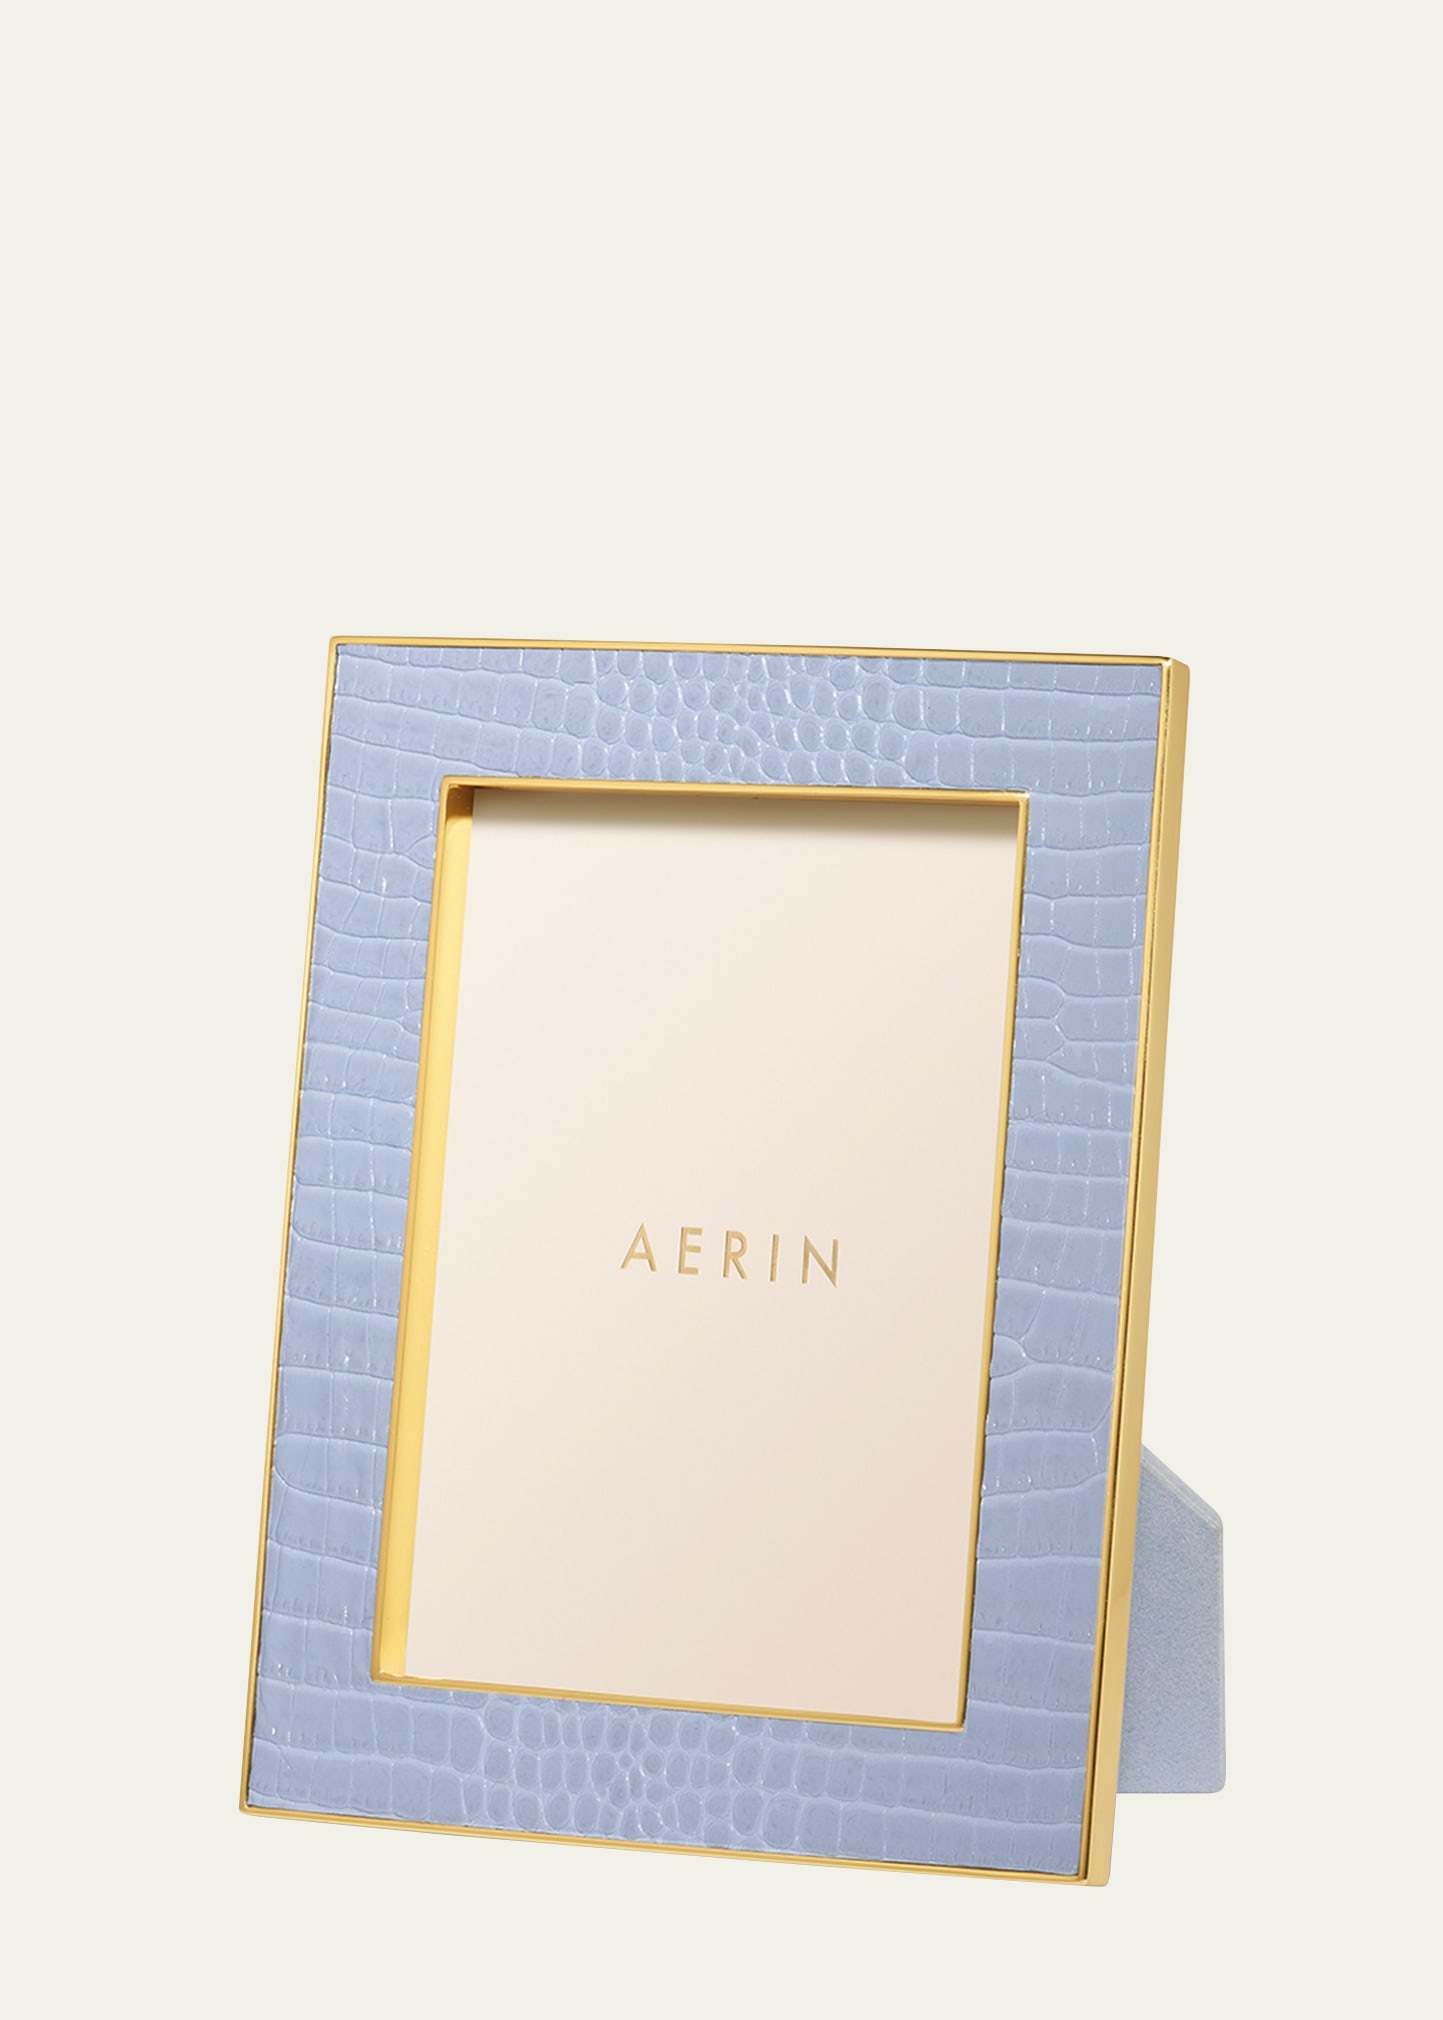 Aerin Classic Crocodile Leather Frame, 5x7 In Blue